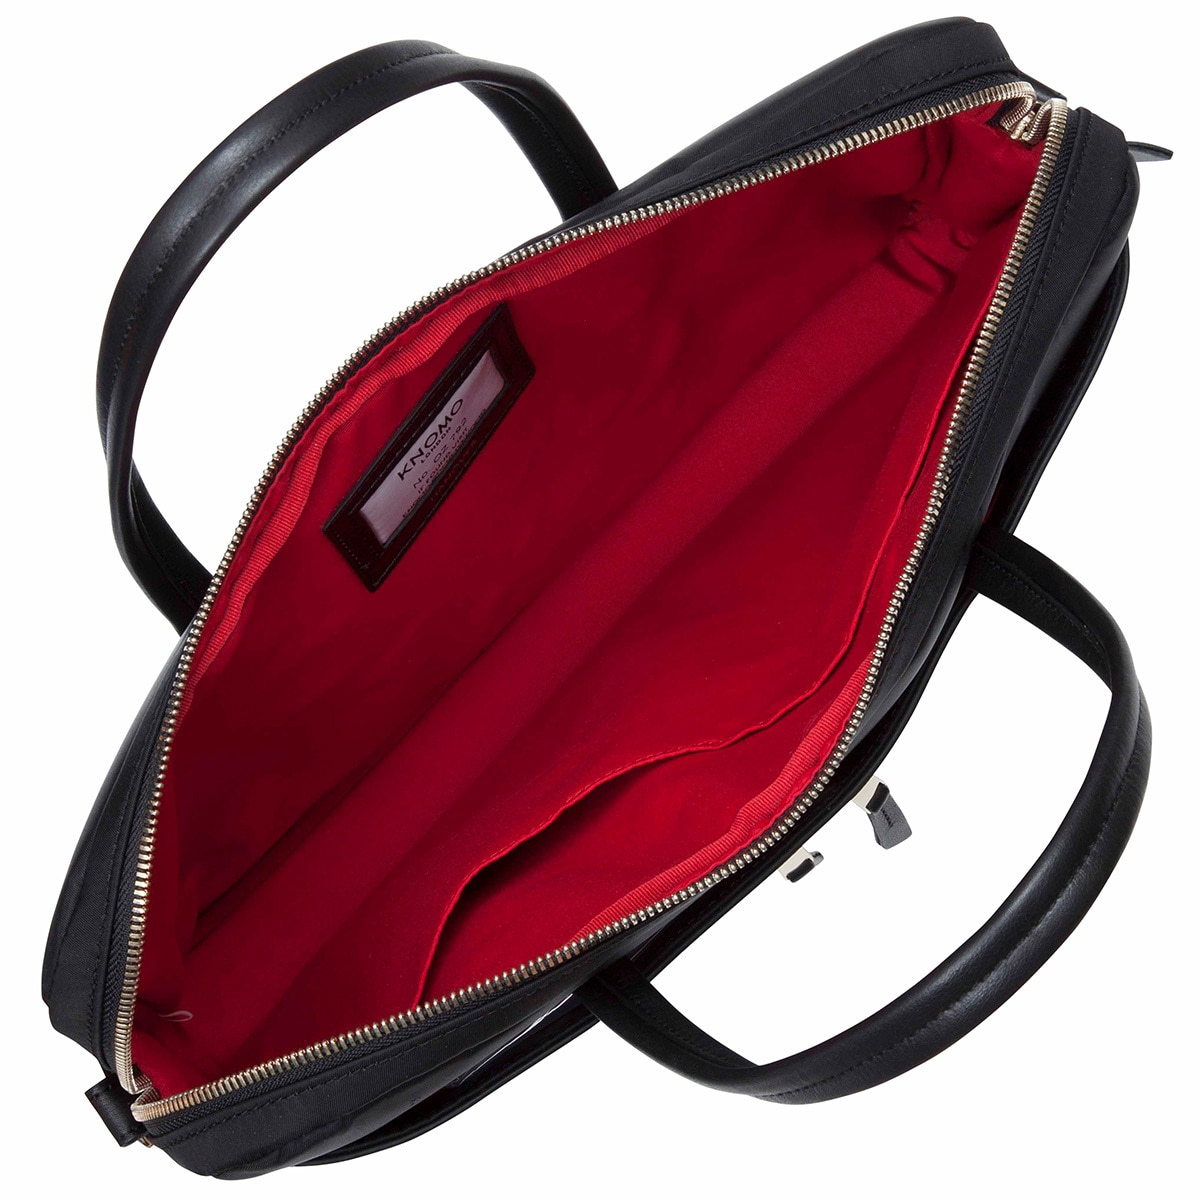 Mayfair Hanover Laptop Bag 14"